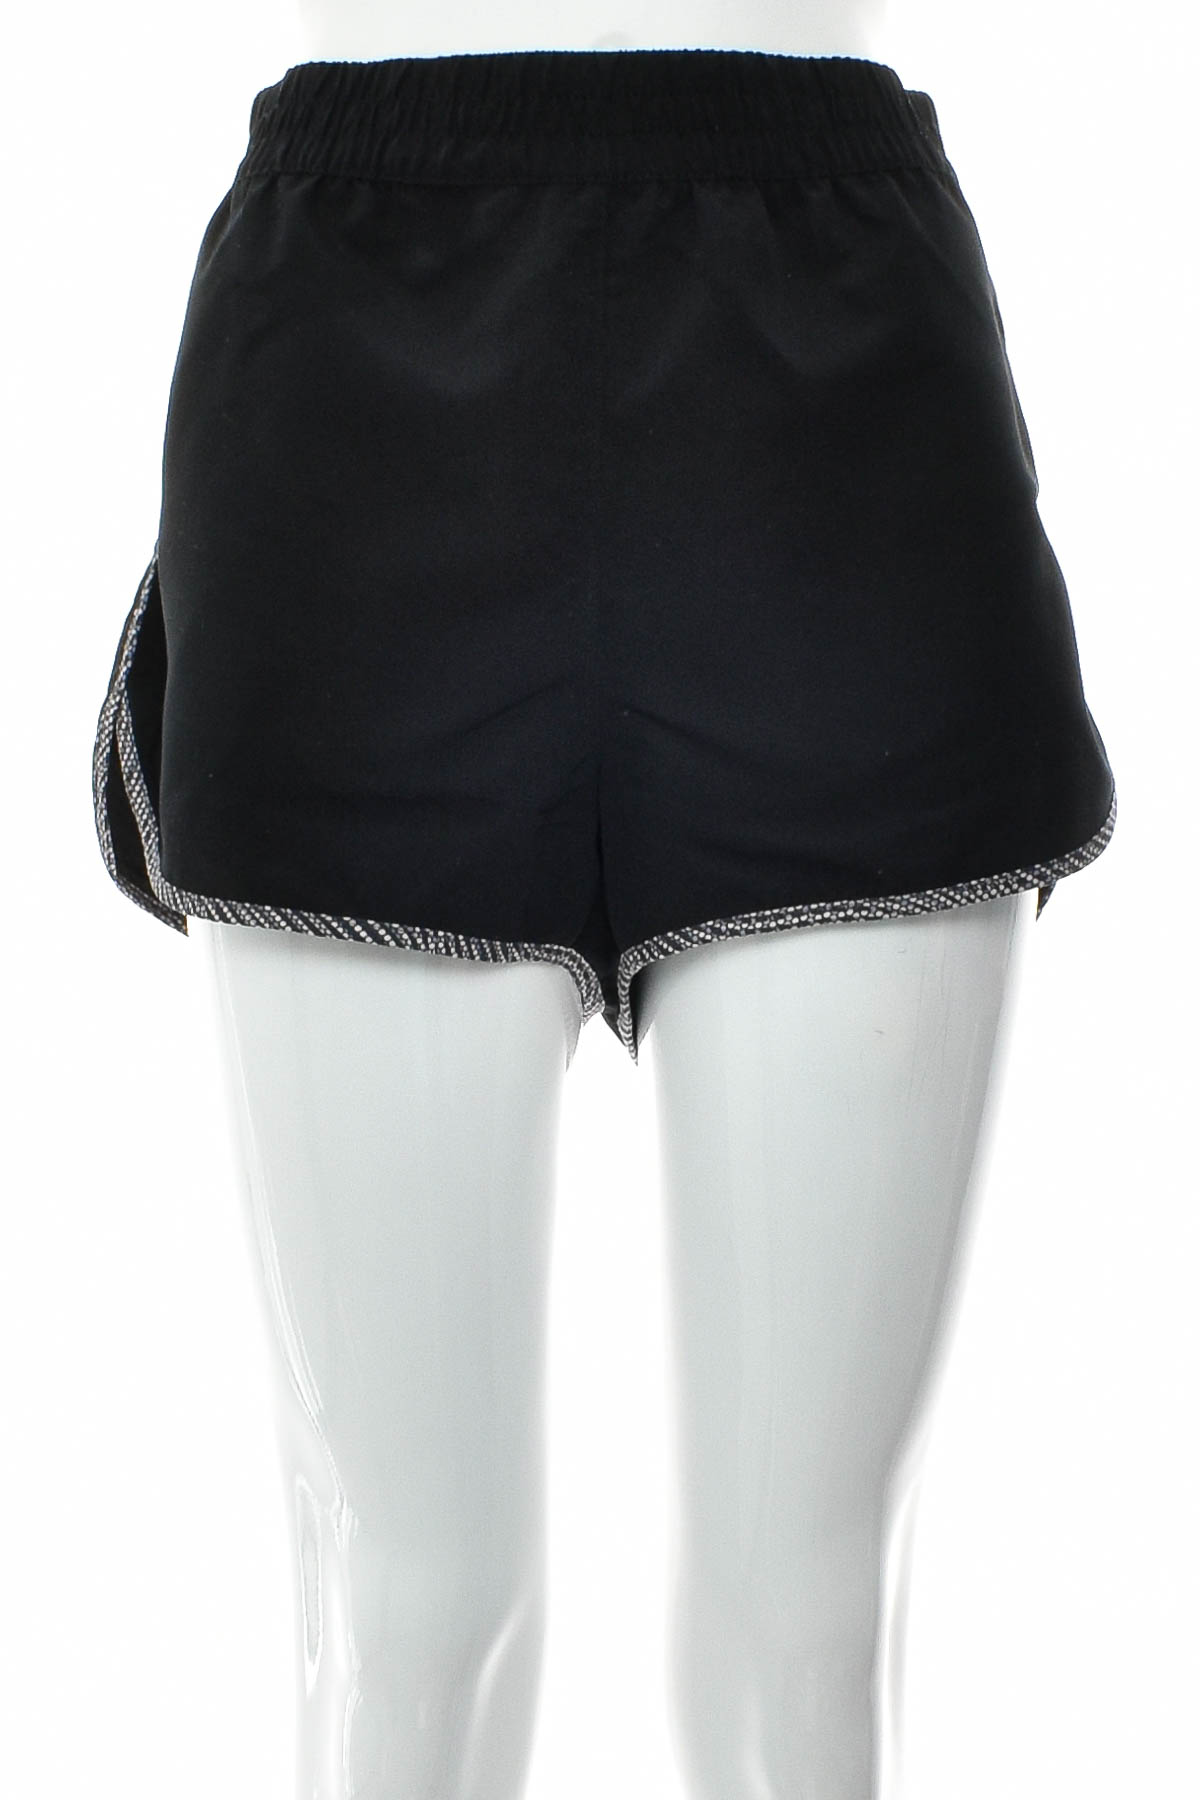 Women's shorts - Sophia THIEL - 0